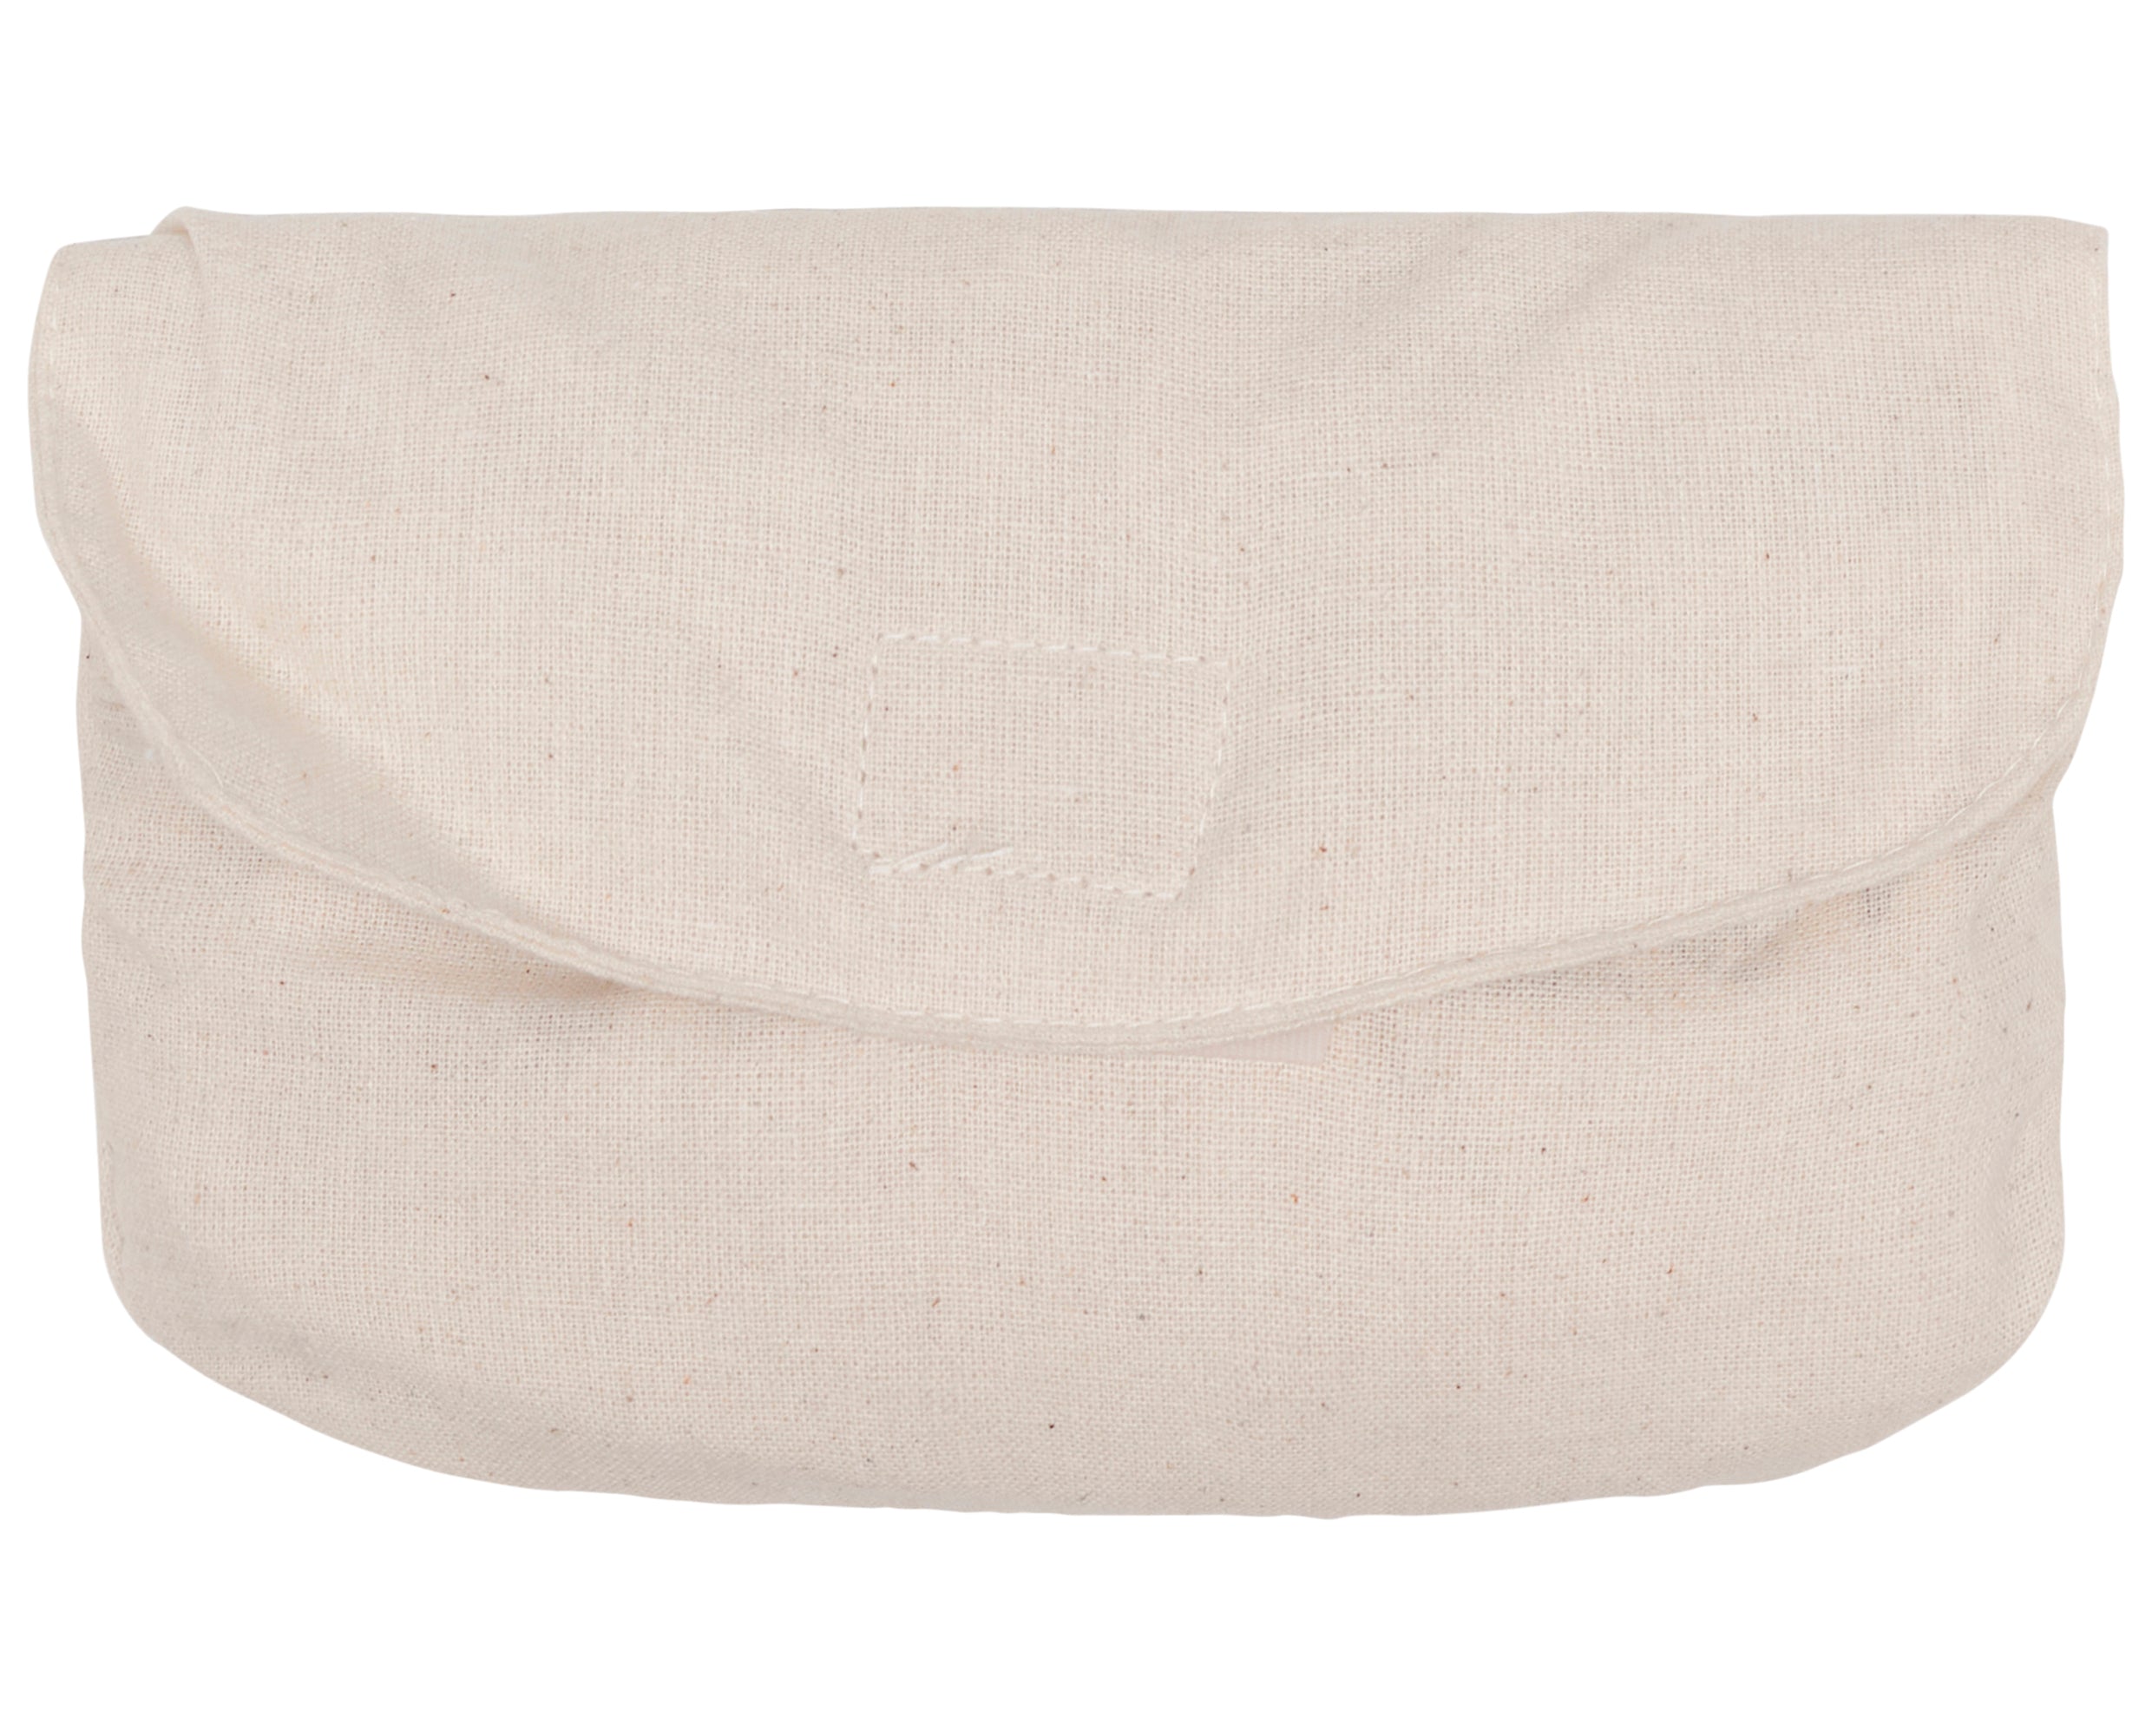 100% organic cotton tote bag